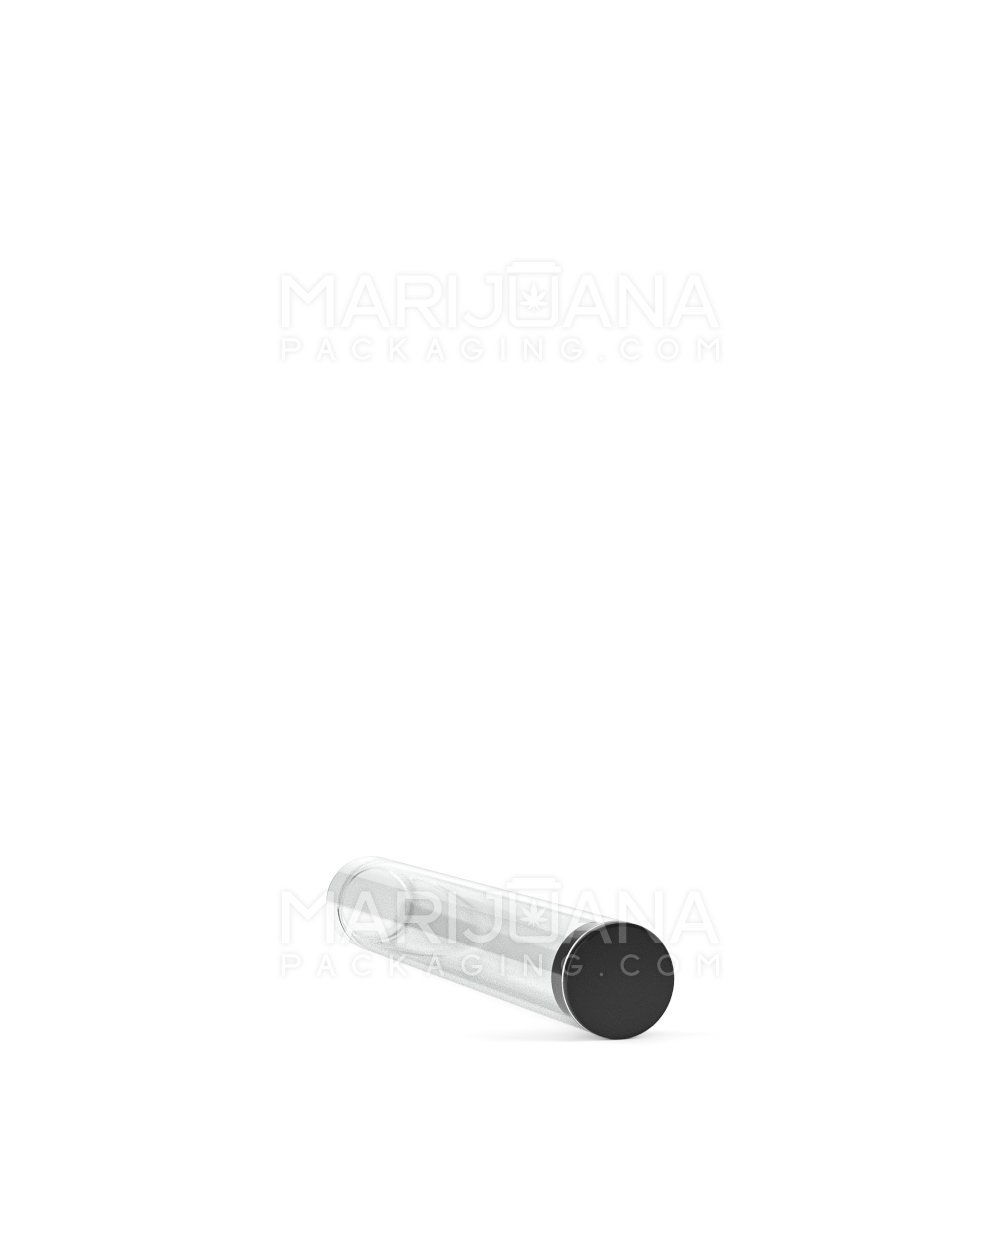 Buttonless Vape Cartridge Tube w/ Black Cap | 86mm - Clear Plastic - 500 Count - 4